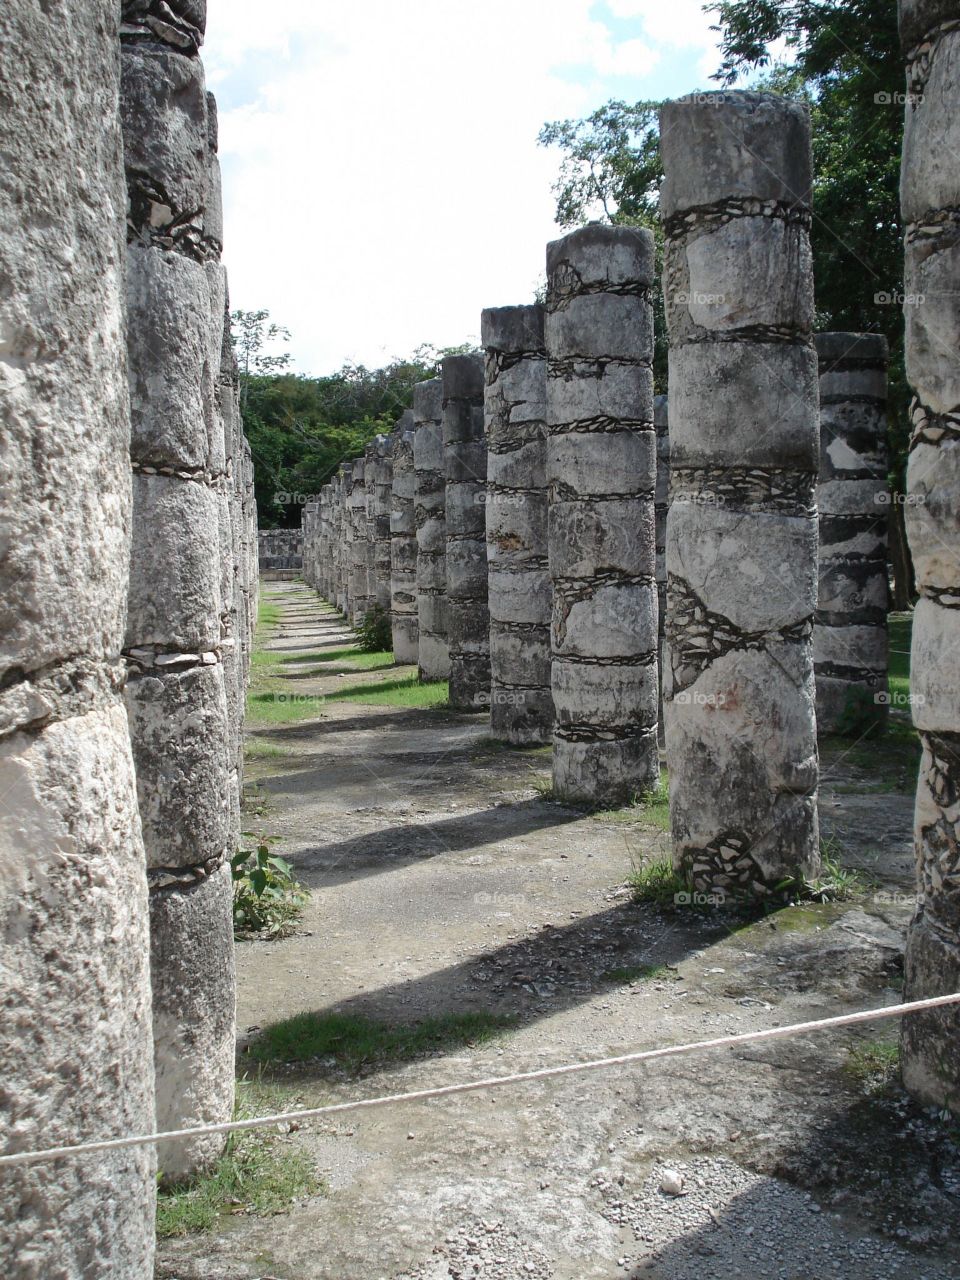 Ancient Pillars
